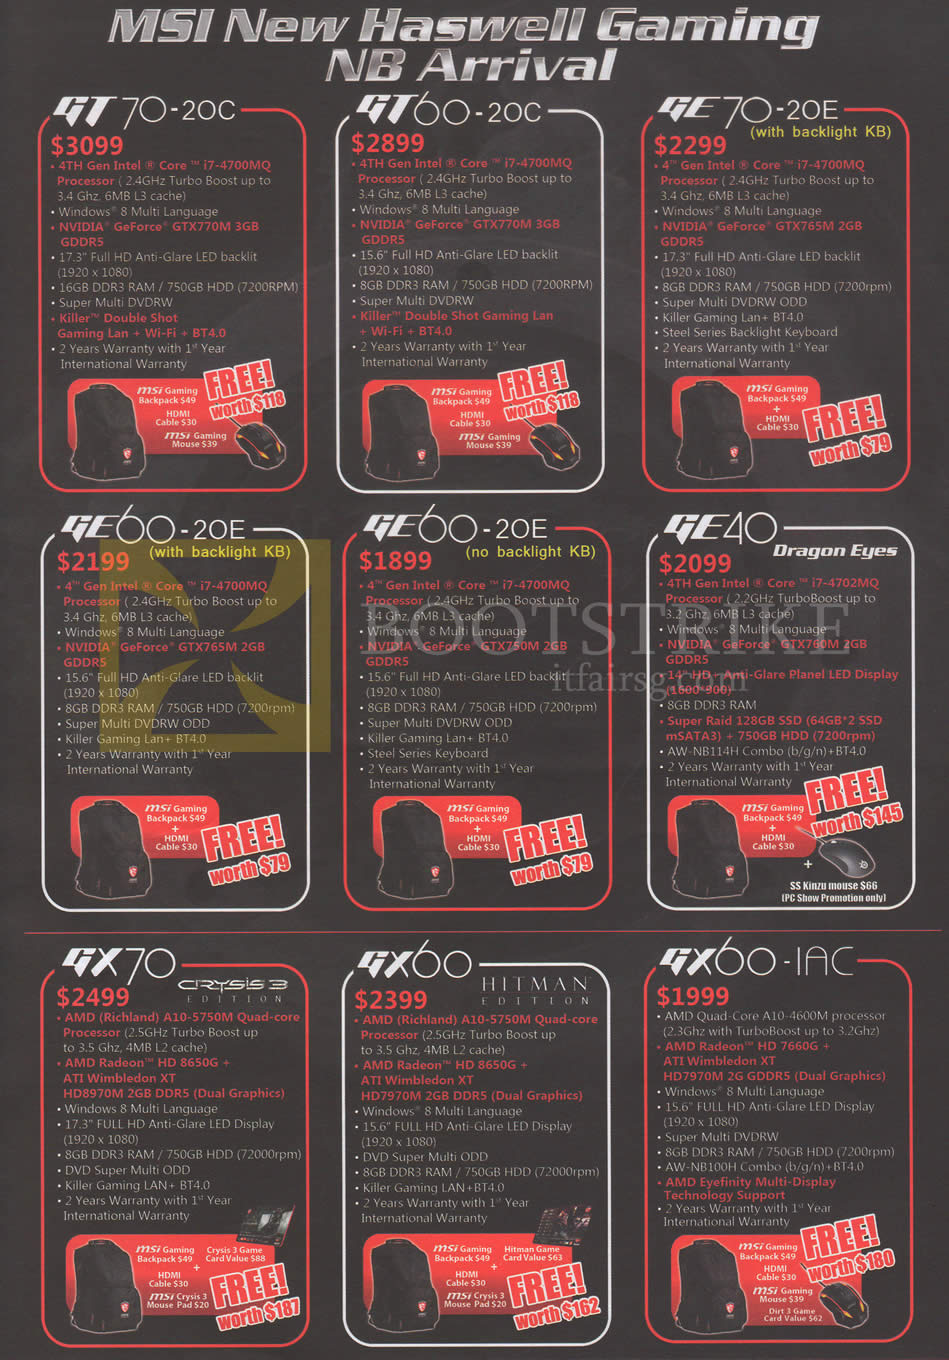 PC SHOW 2013 price list image brochure of MSI Notebooks GT70-20C, GT60-20C, GE70-20E, GE60-20E, GE40, GX70, GX60, GX60-IAC